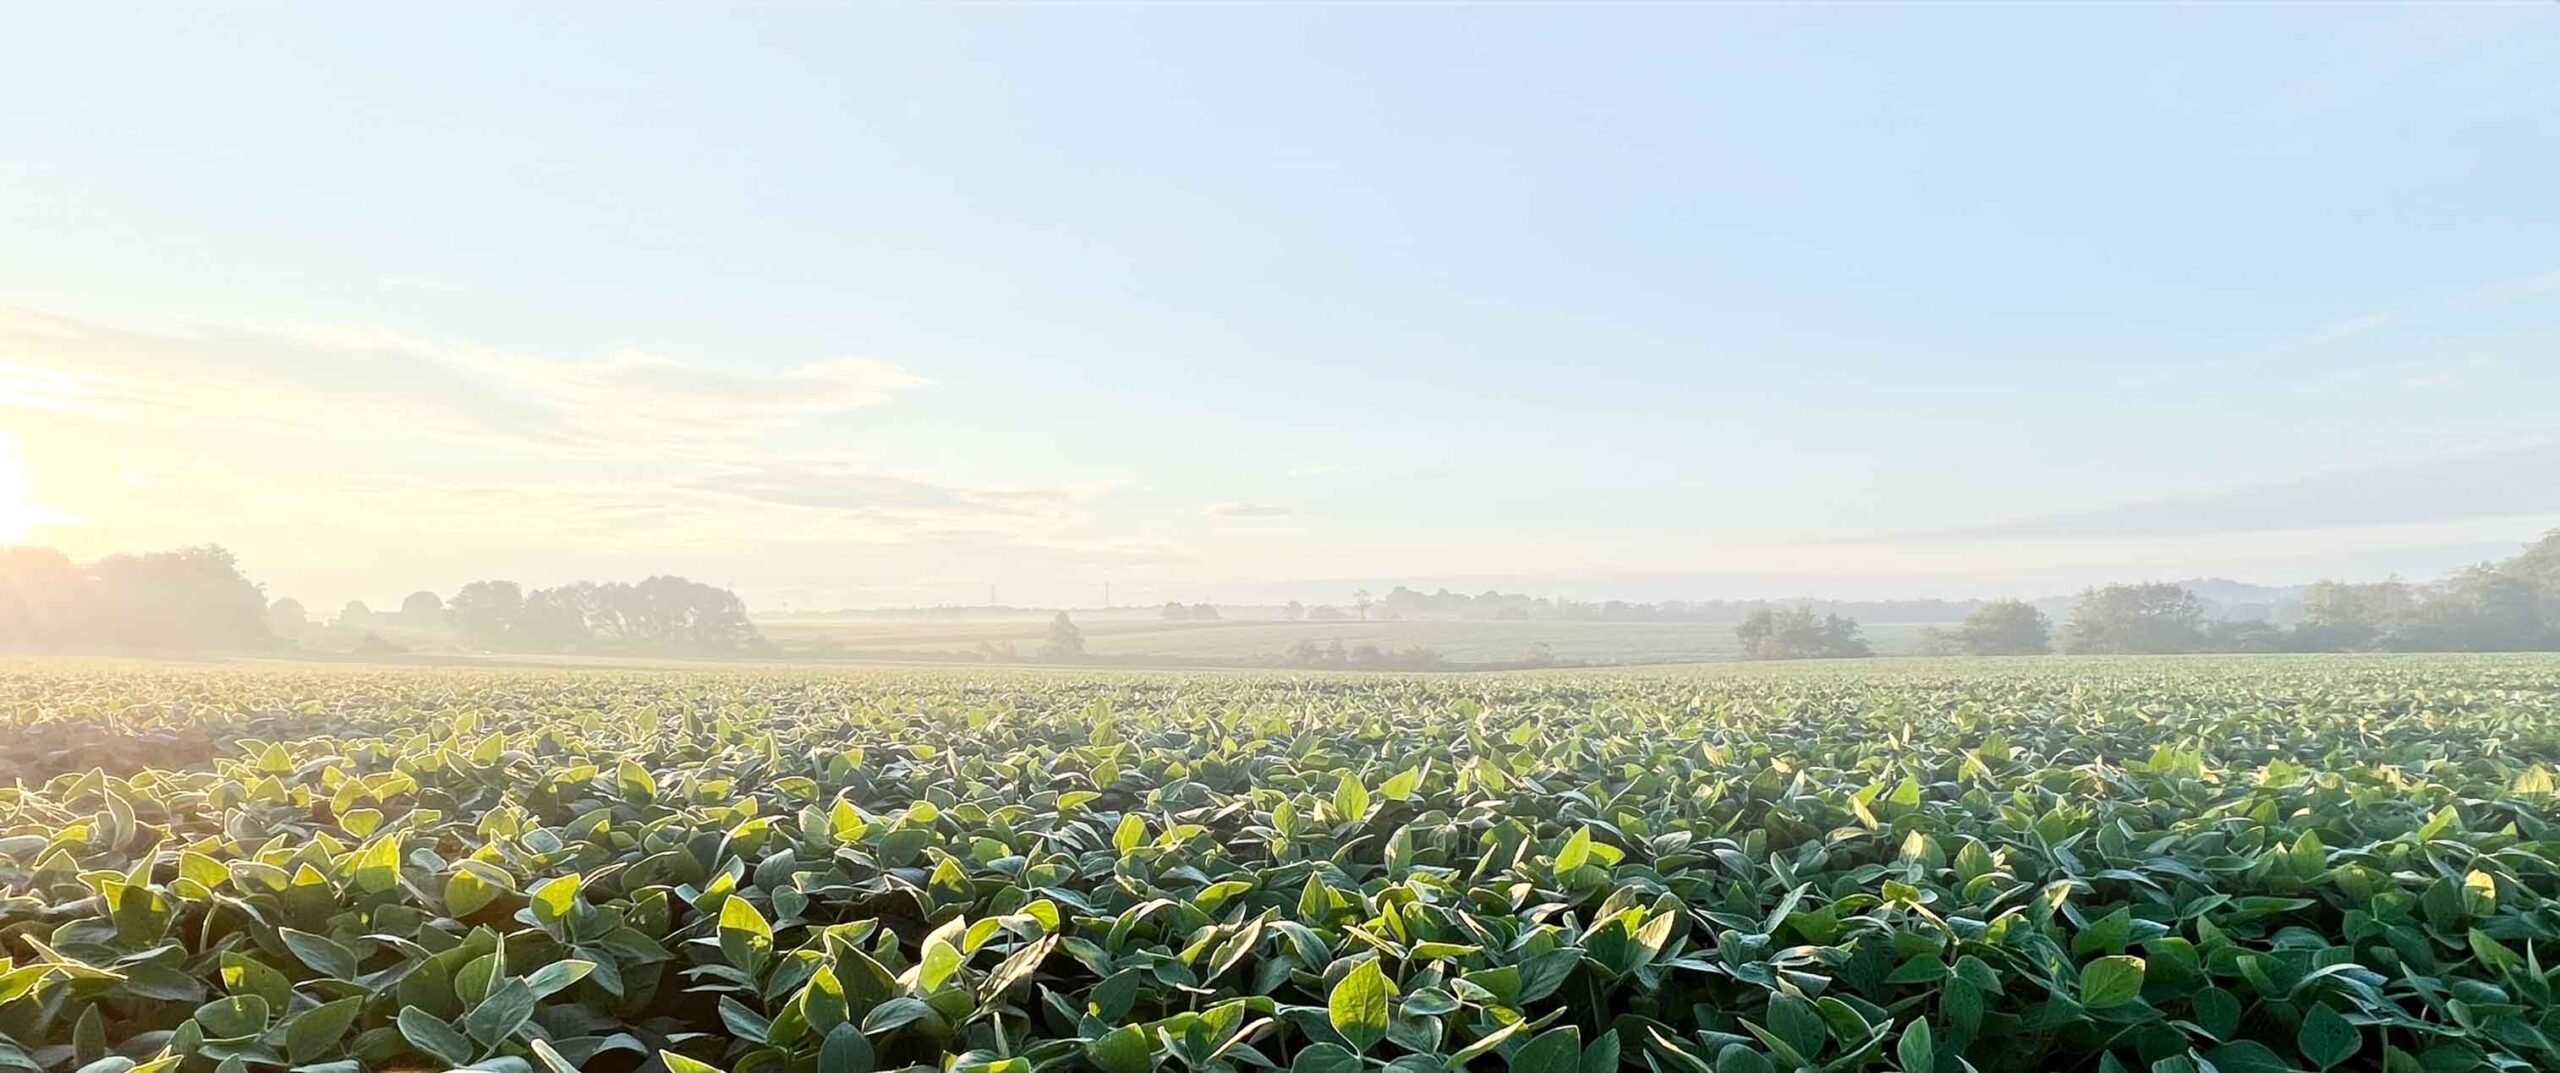 Image of a cornfield at sunrise.